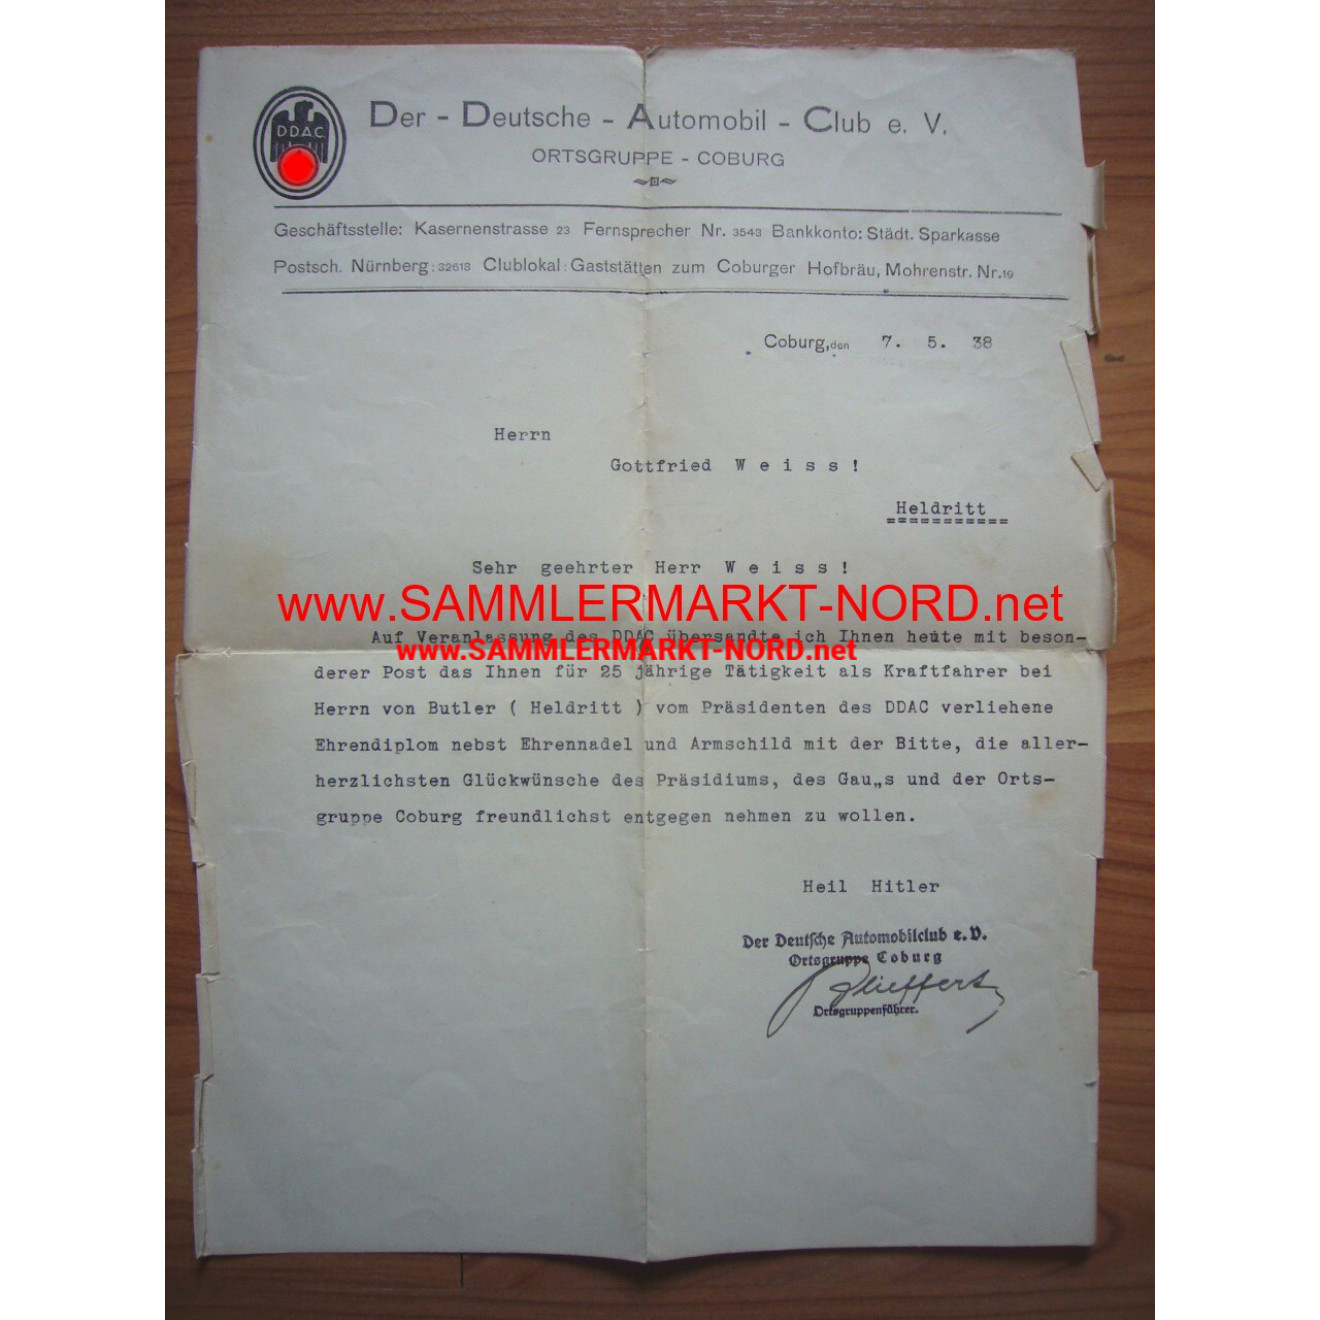 D.D.A.C. - Award of Honorary Diploma, lapel pin and Armshield